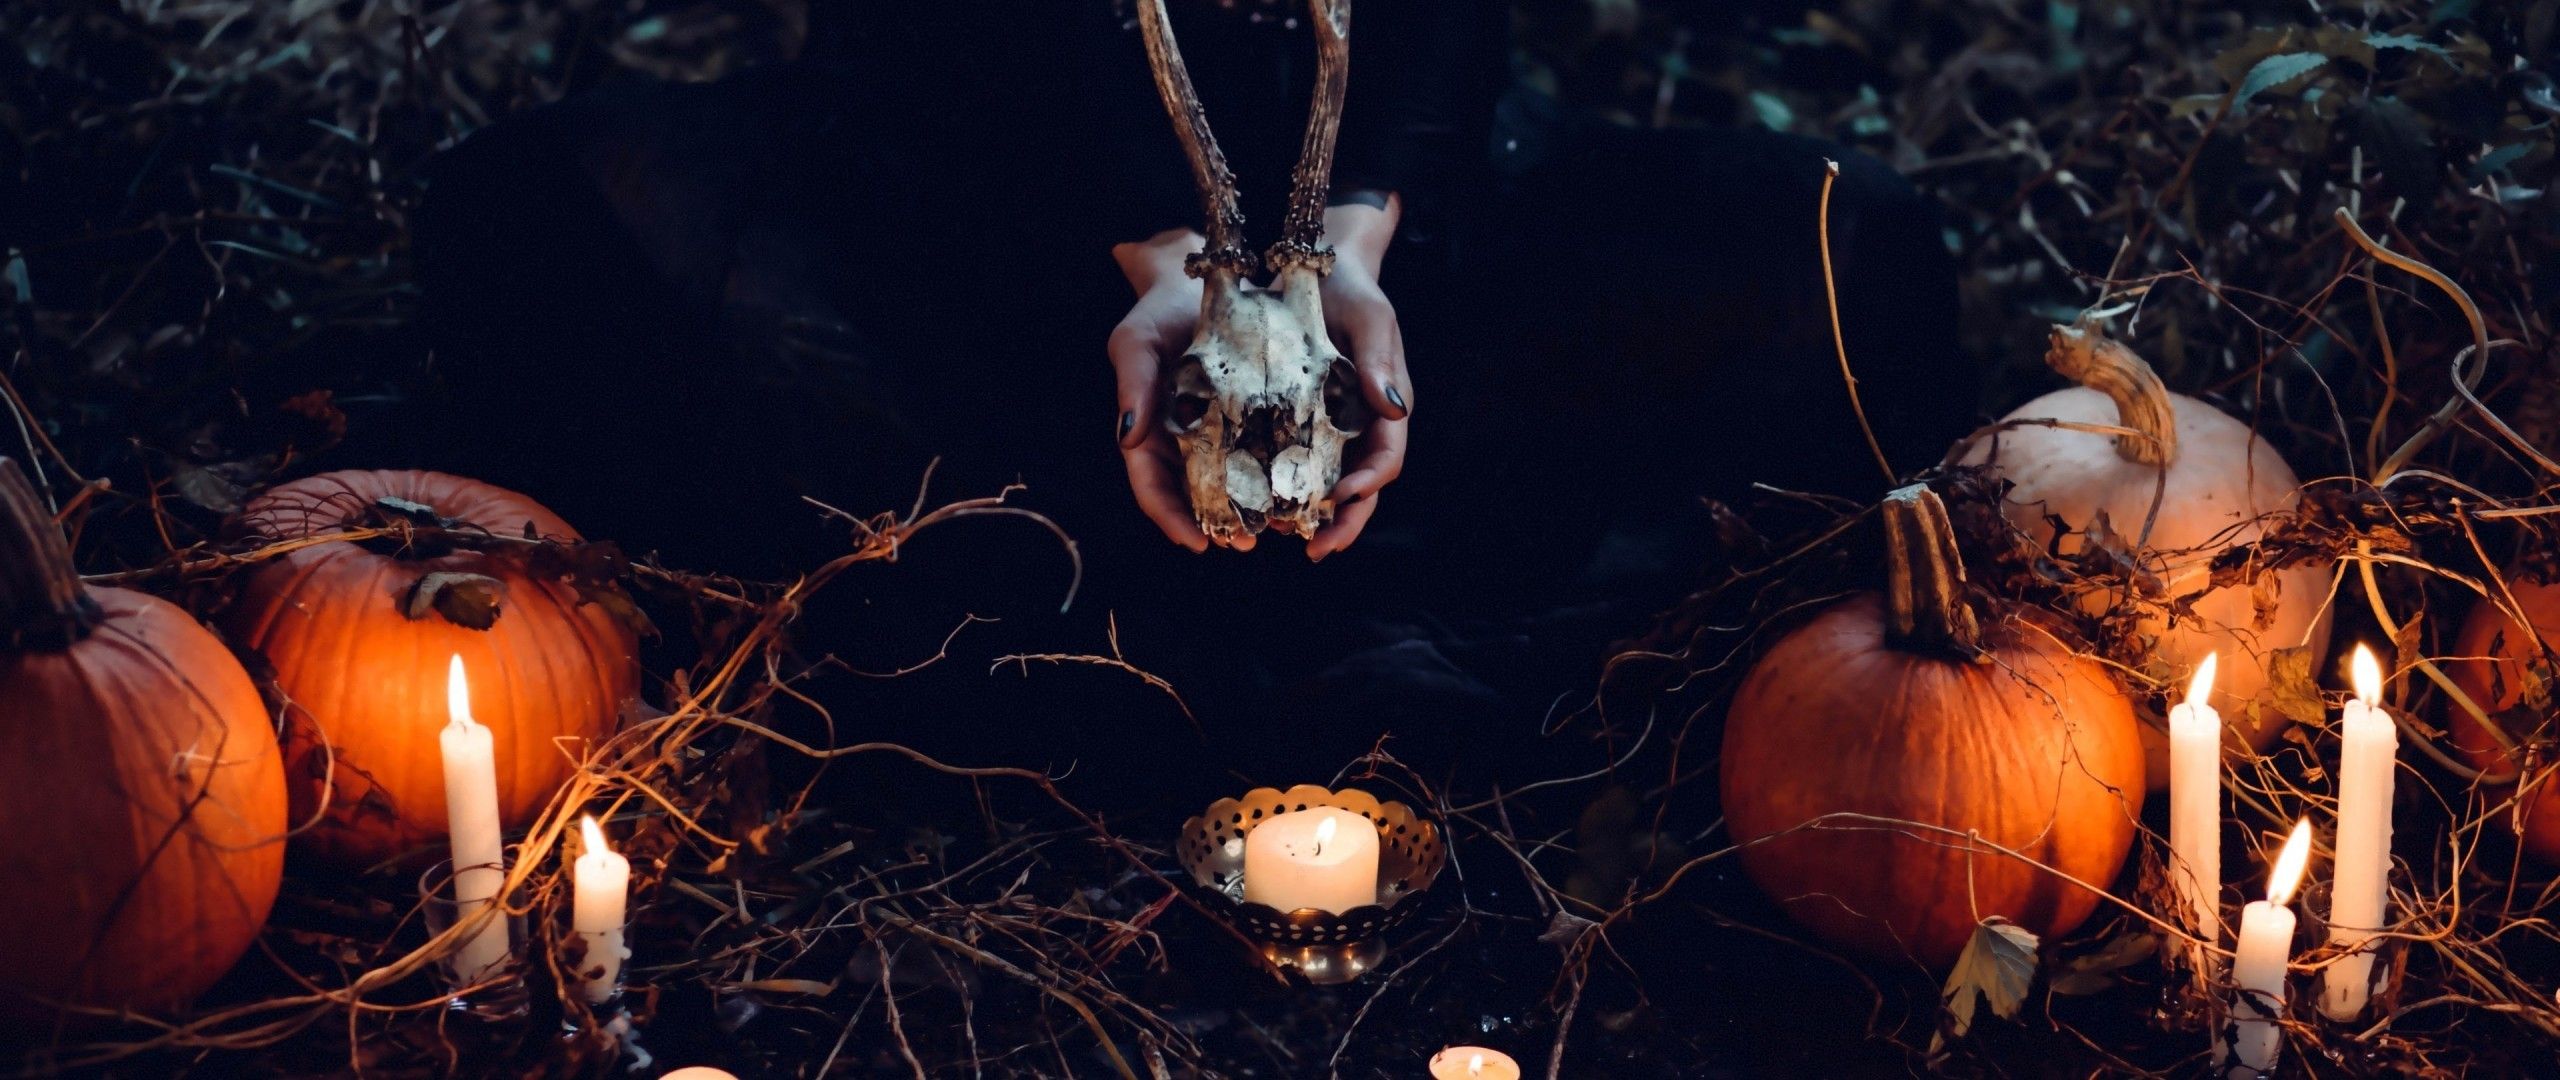 Download 2560x1080 Halloween Pumpkins, Skull, Candles, Ritual Wallpaper